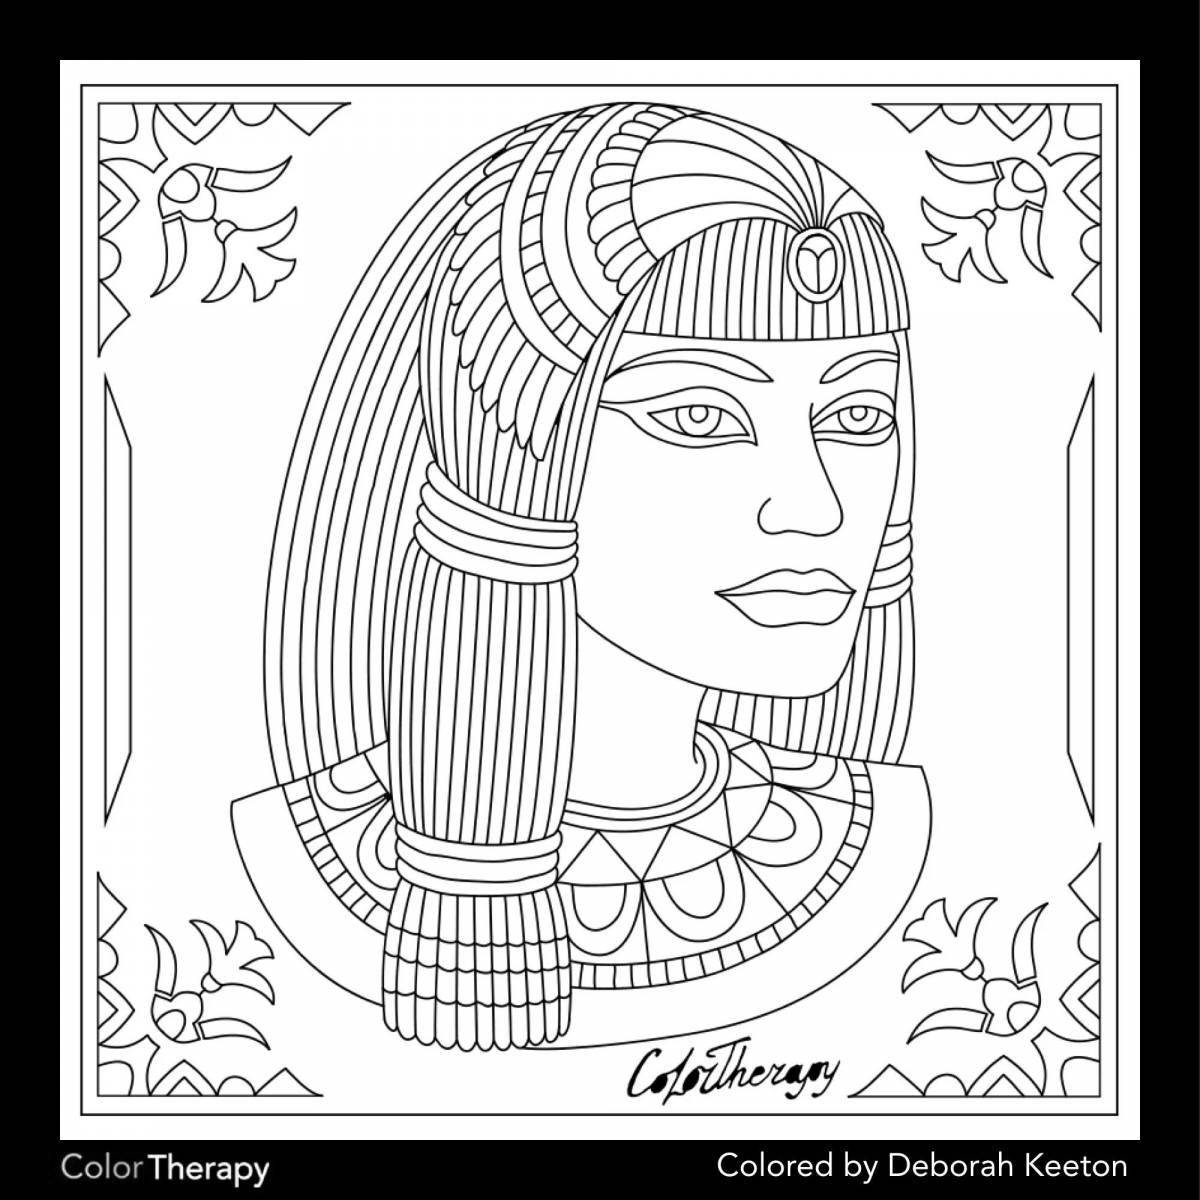 Cleopatra shining coloring book